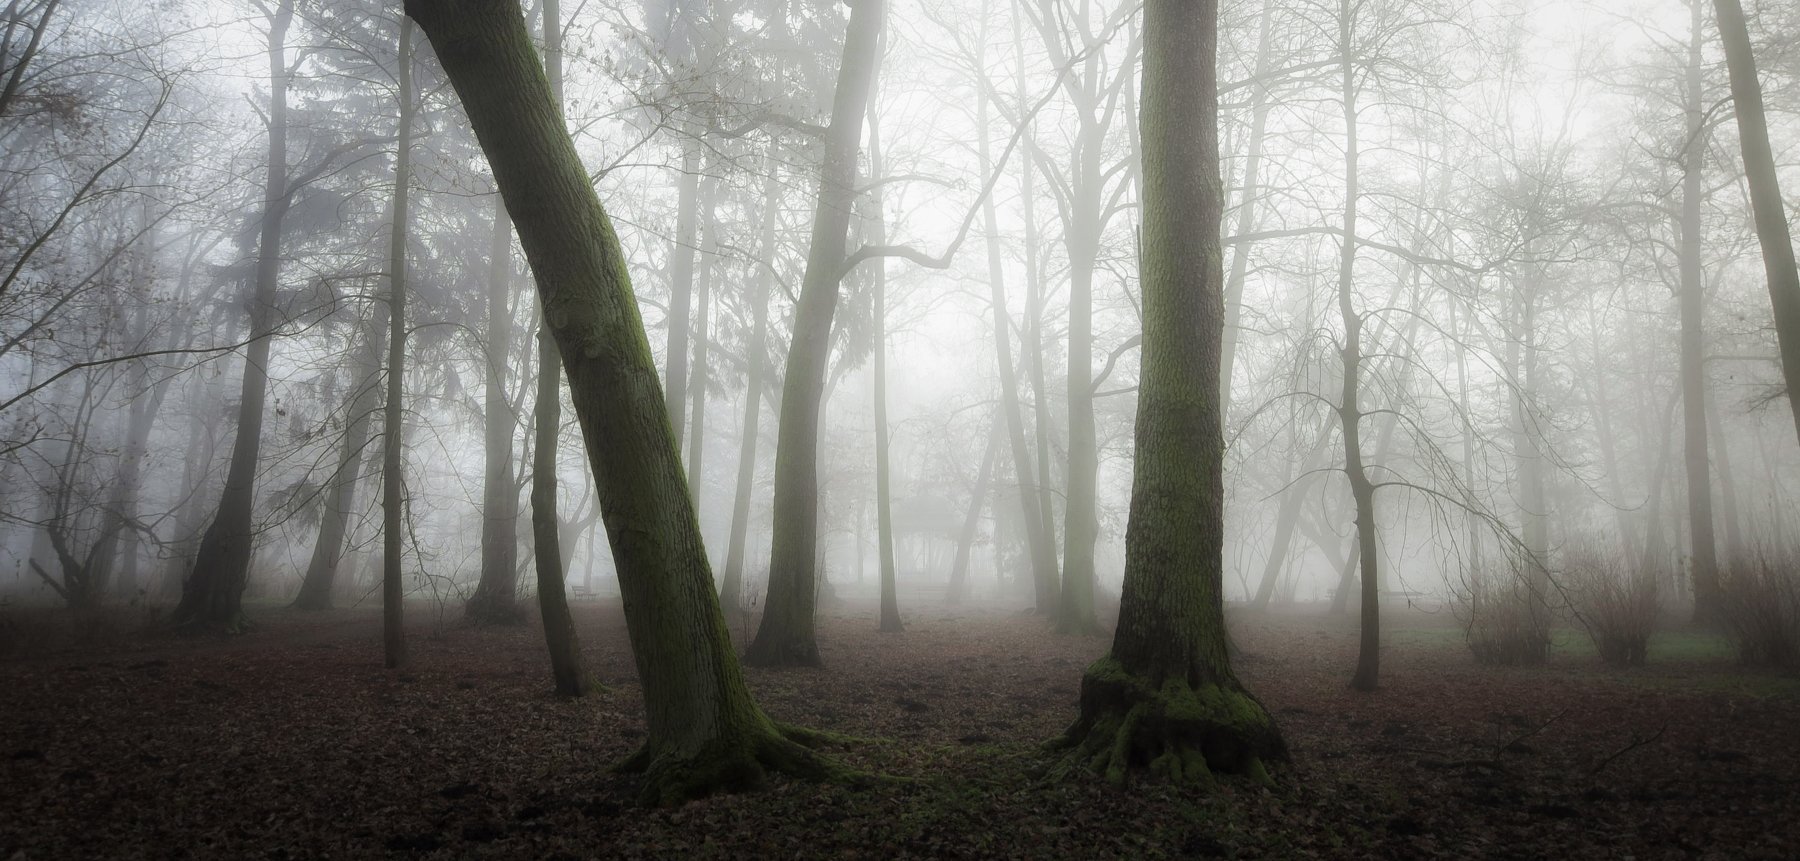 Park,Fog,Nature,Landscape,Trees,Light,Nikon,Mist,Winter,Atmosphere,Morning, Krzysztof Tollas